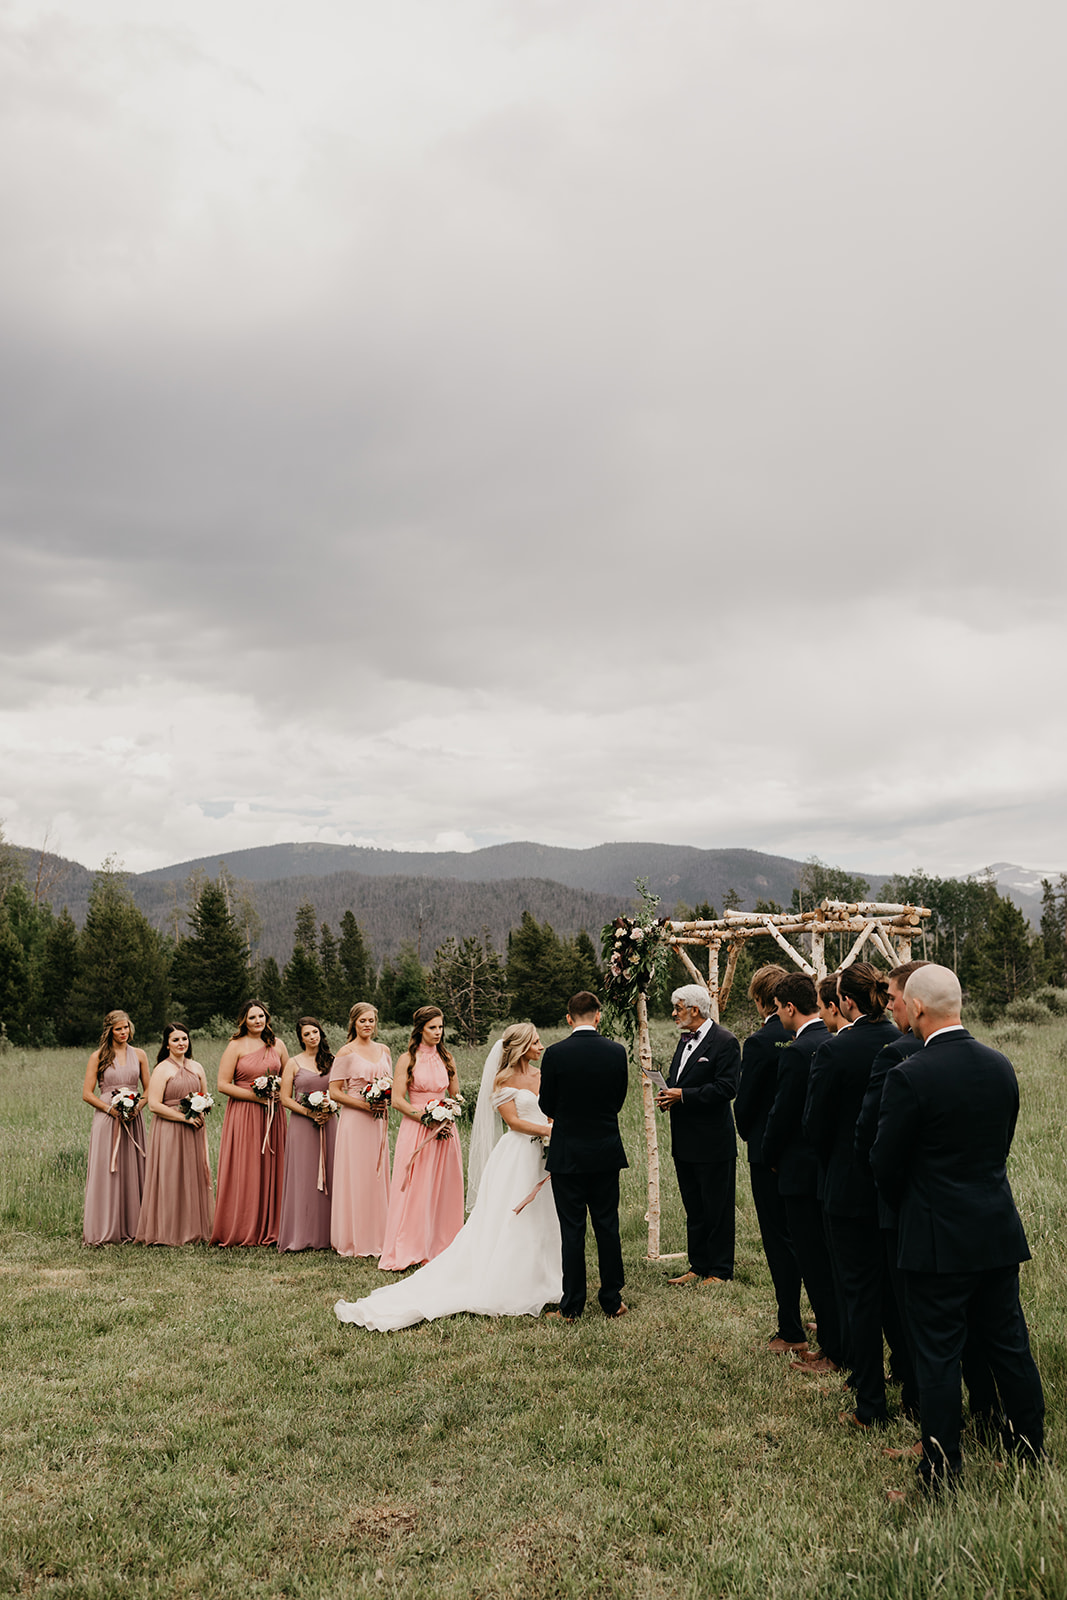 A mountain wedding ceremony